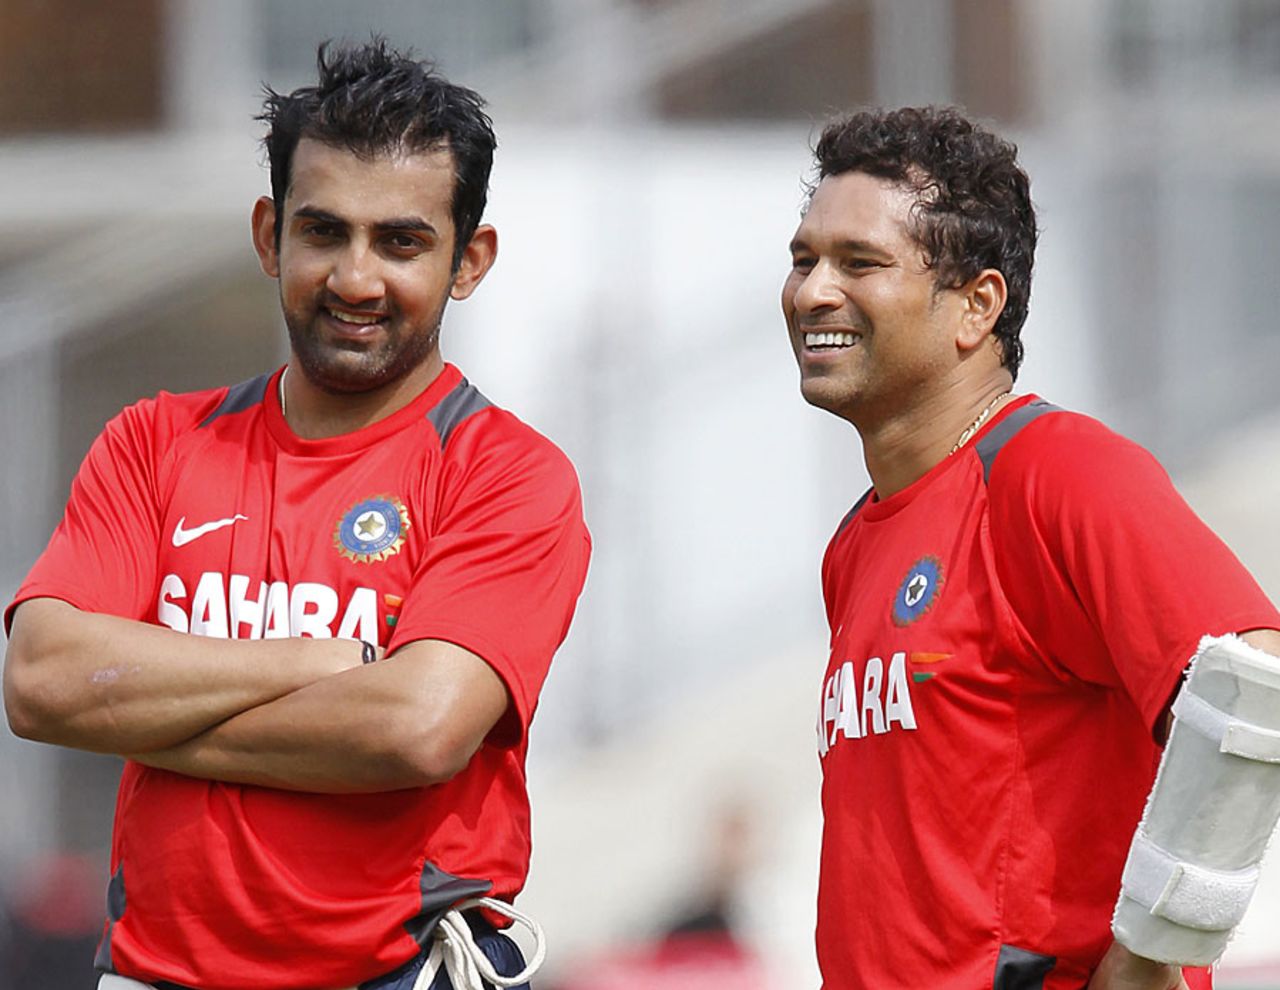 Gautam Gambhir and Sachin Tendulkar take a break at a training session ahead of the final Test, The Oval, August 17, 2011